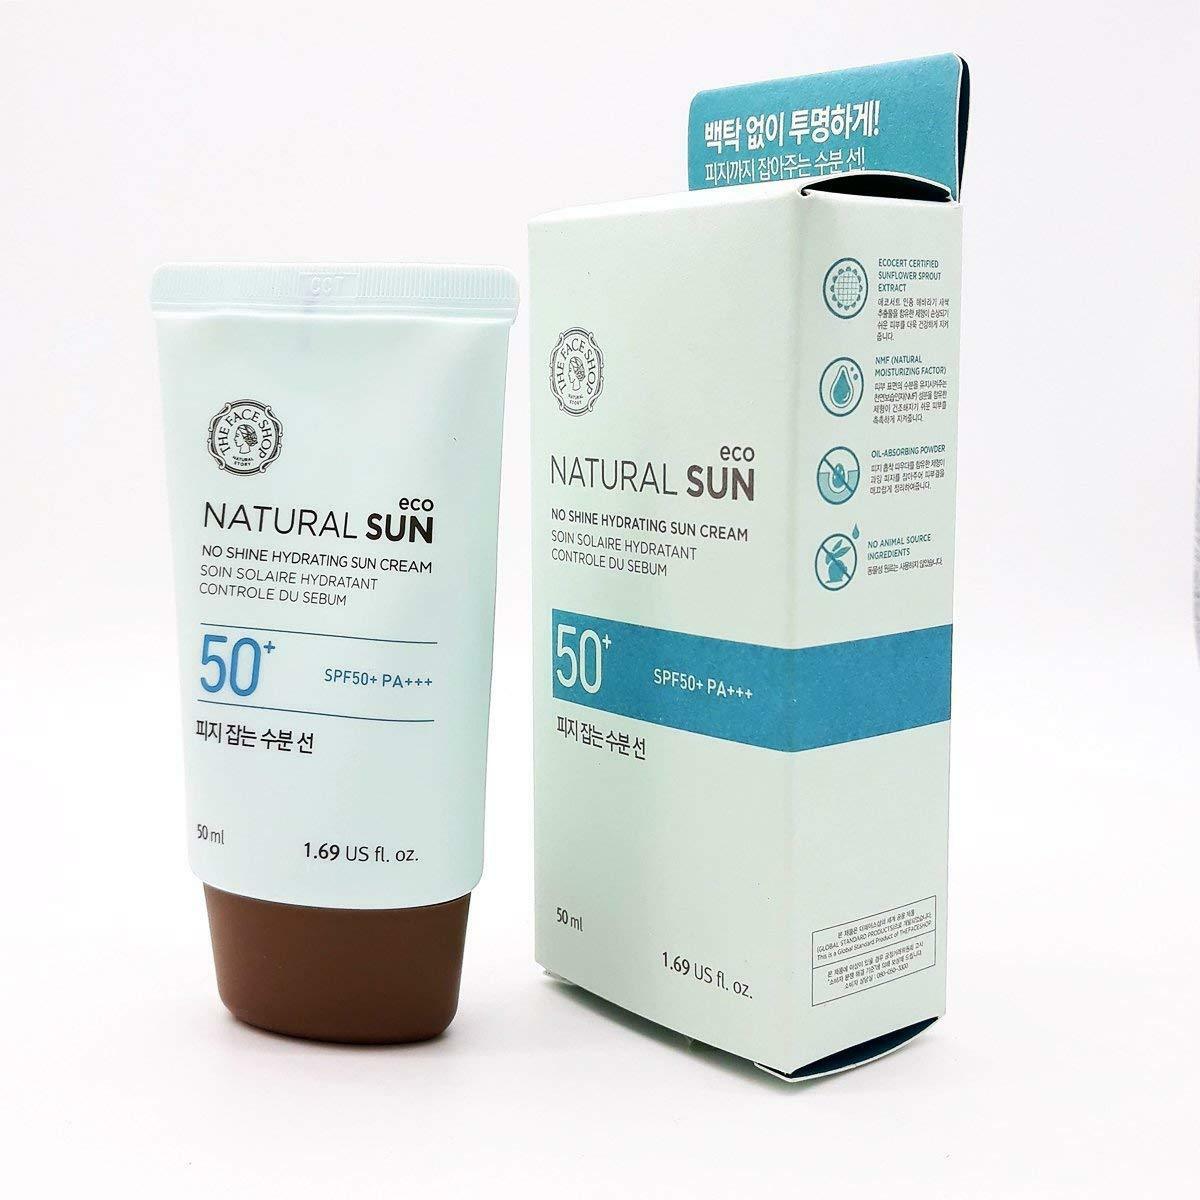 THE FACE SHOP Natural Sun Eco No Shine Hydrating Sun Creams (50ml) SPF50+/PA+++